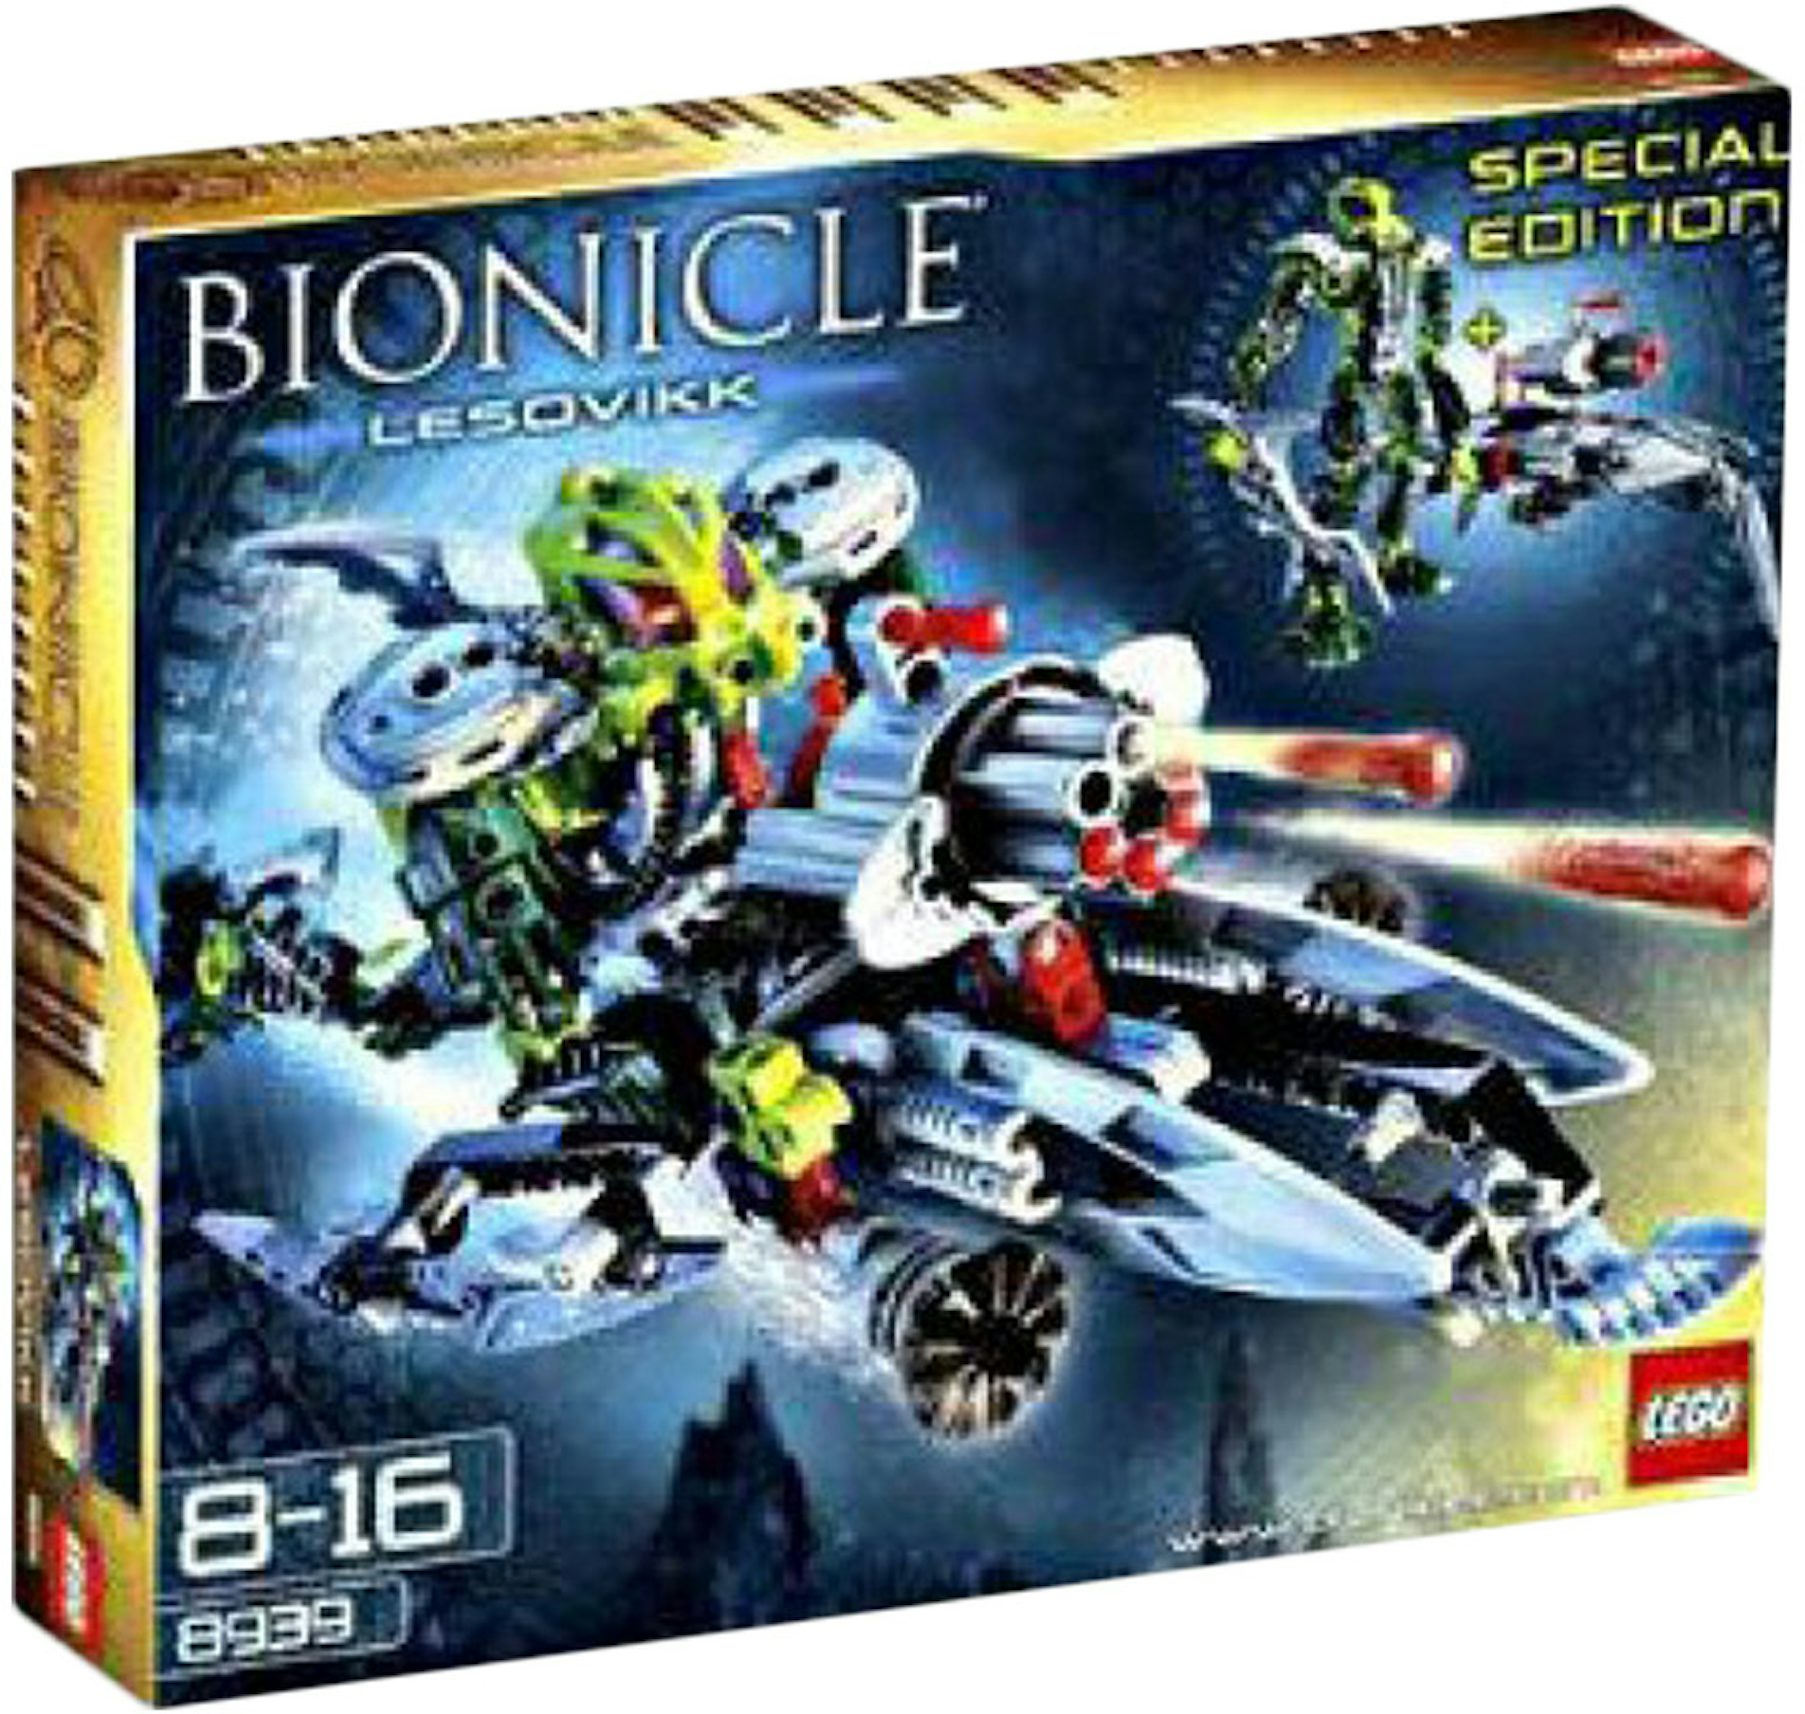 https://images.stockx.com/images/LEGO-Bionicle-Lesovikk-Set-8939.jpg?fit=fill&bg=FFFFFF&w=1200&h=857&fm=jpg&auto=compress&dpr=2&trim=color&updated_at=1647883719&q=60